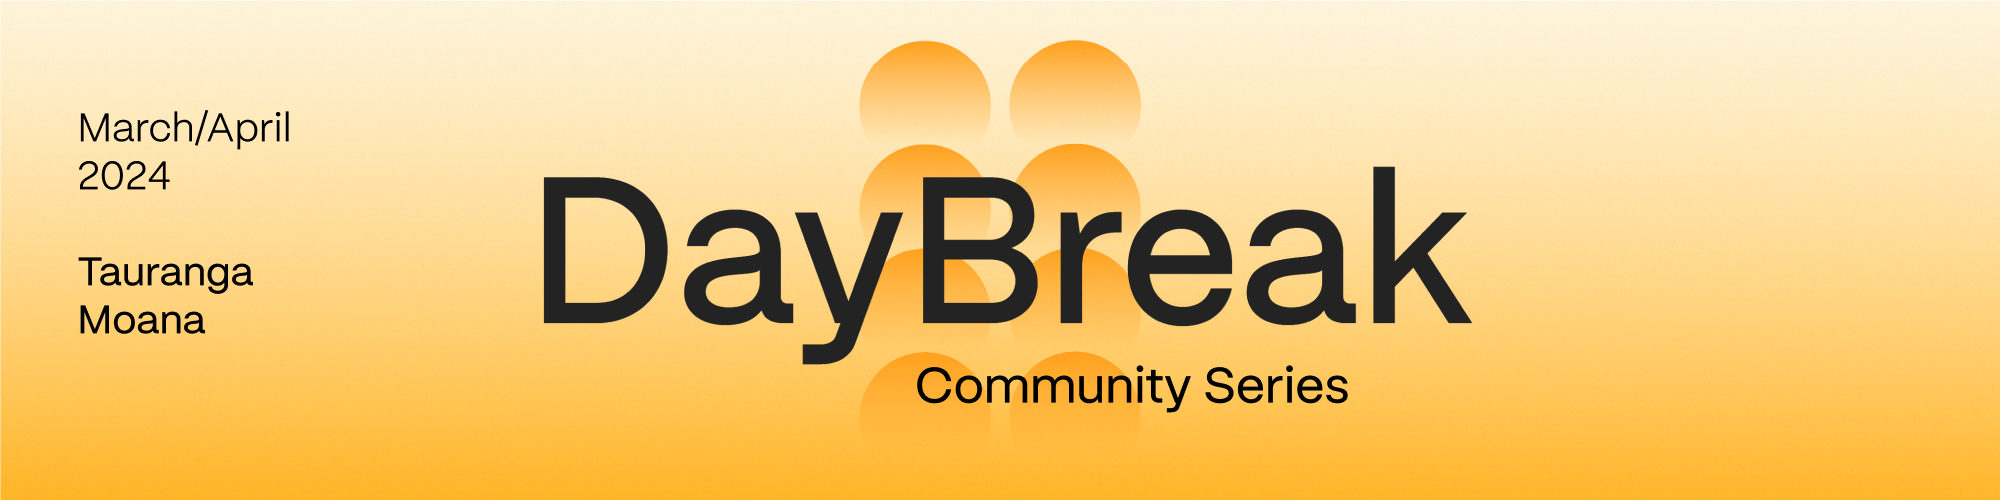 DayBreak Community Series logo, March/April 2024, Tauranga Moana